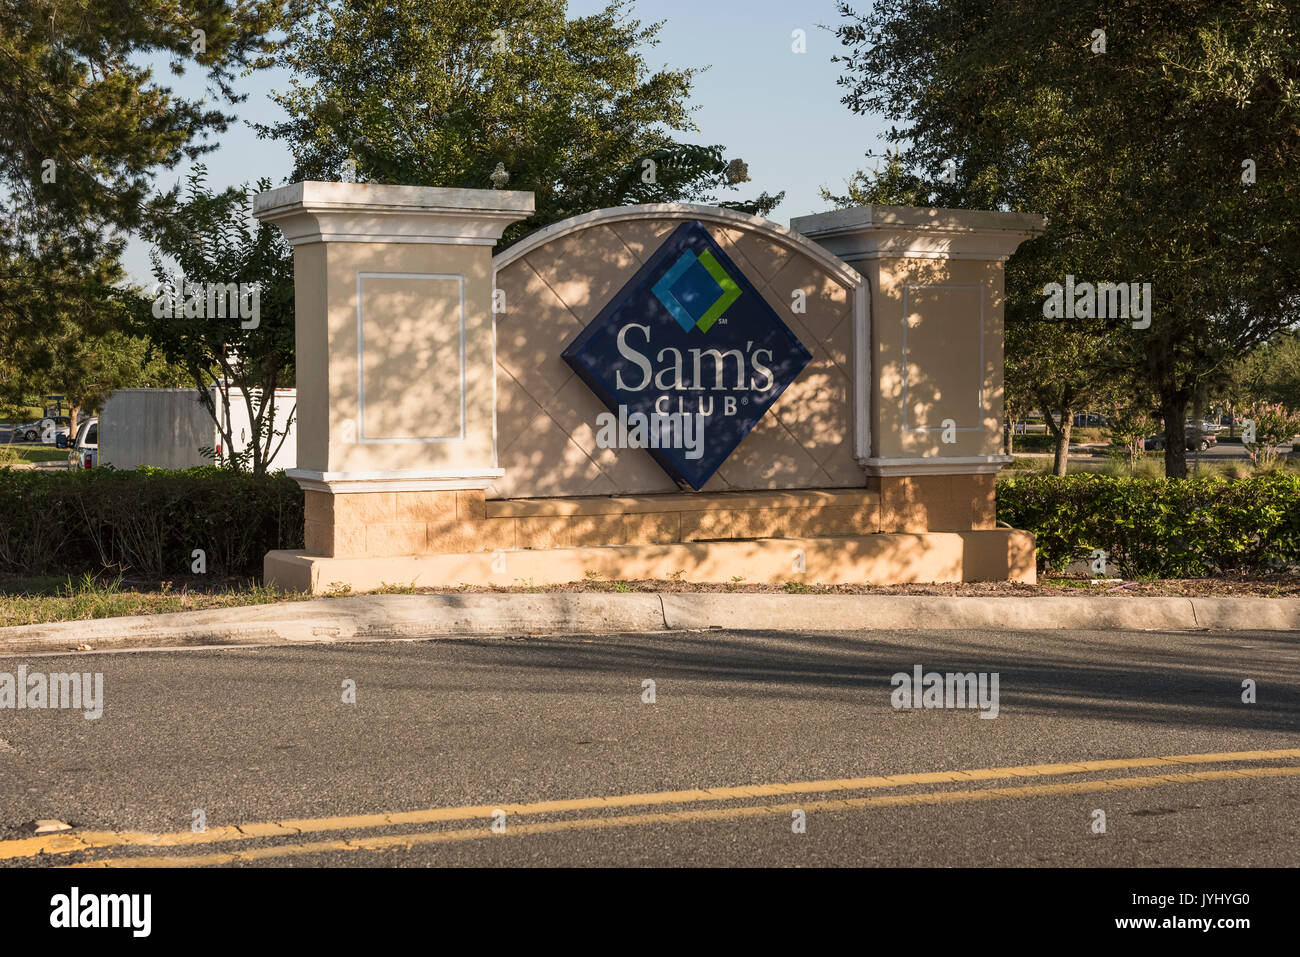 Sam's Club Lady Lake Florida USA Stock Photo - Alamy